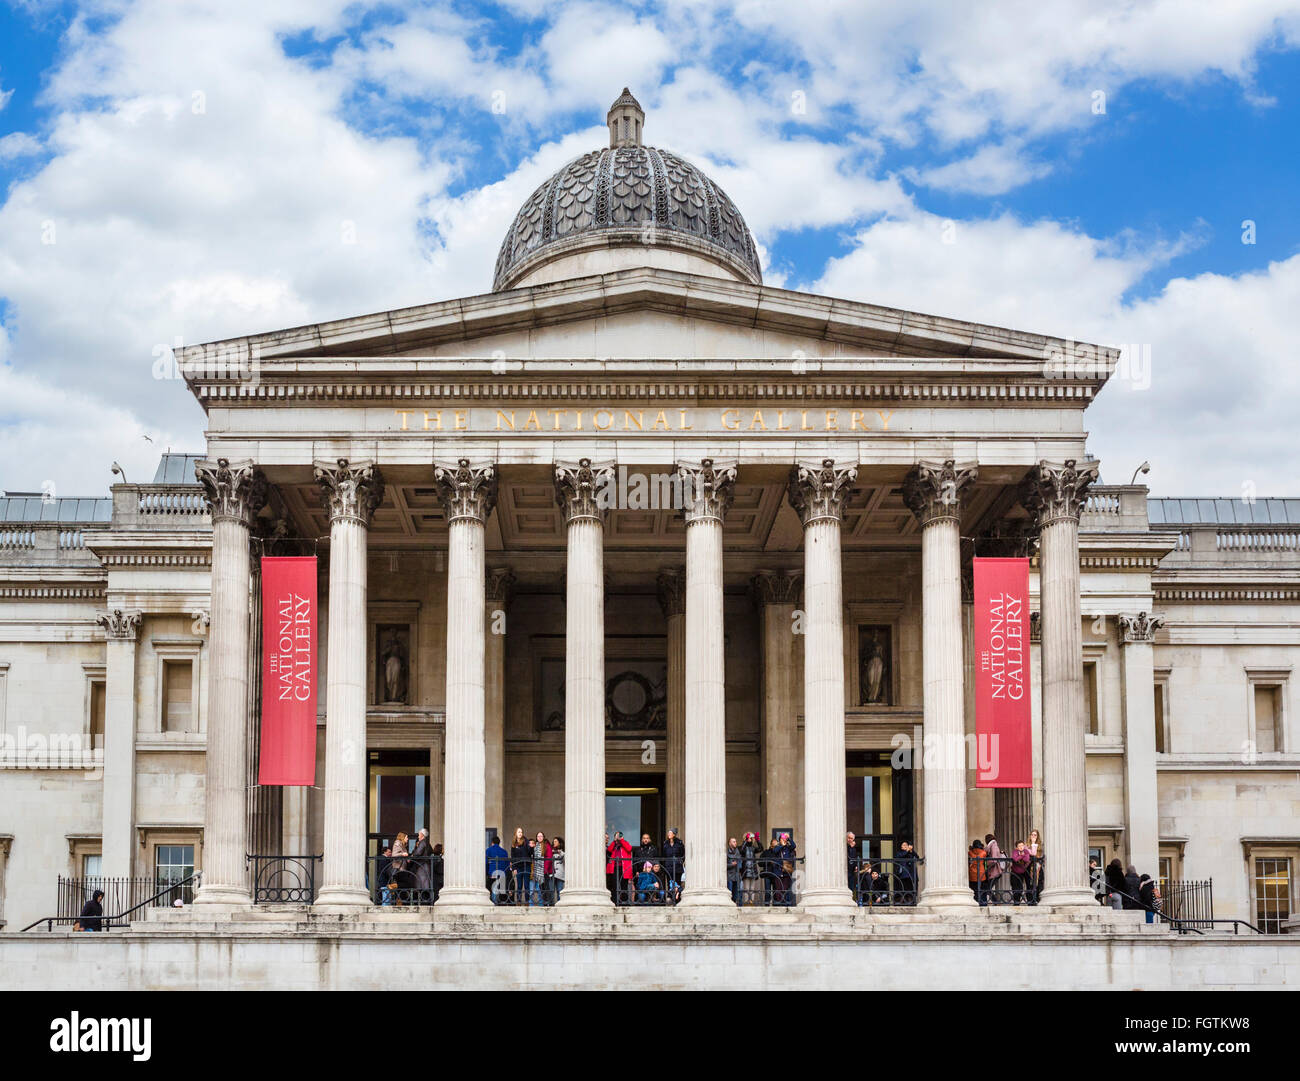 La National Gallery, Trafalgar Square, London, England, UK Banque D'Images